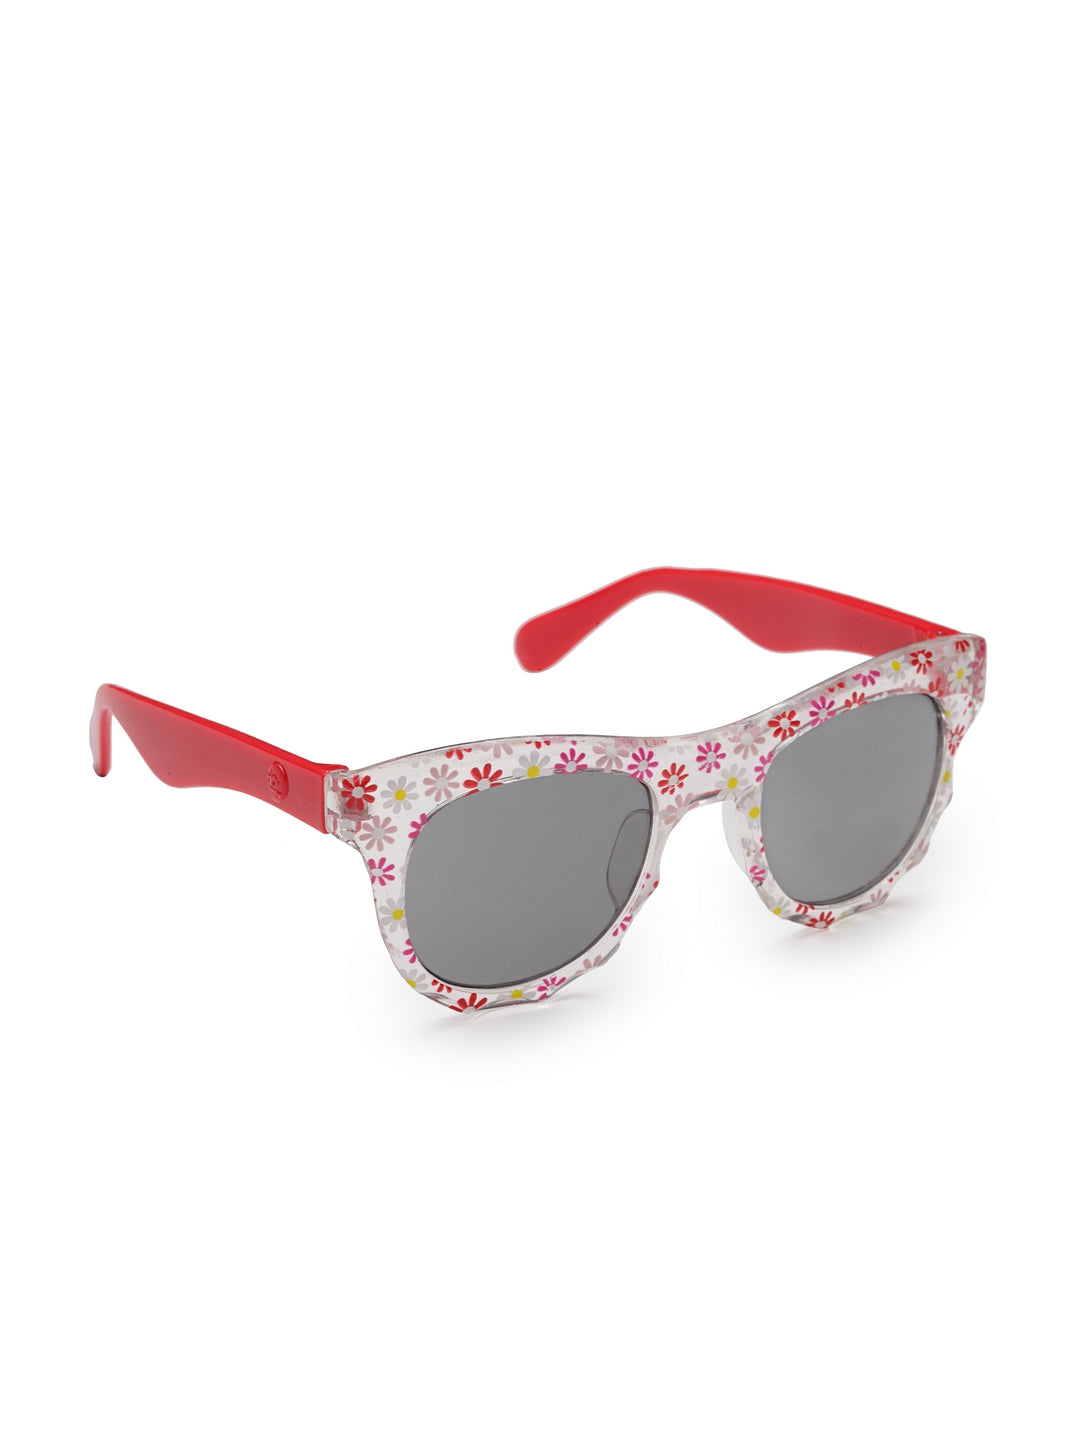 Stol'n Kids Pink Round Sunglasses:Pink Pink